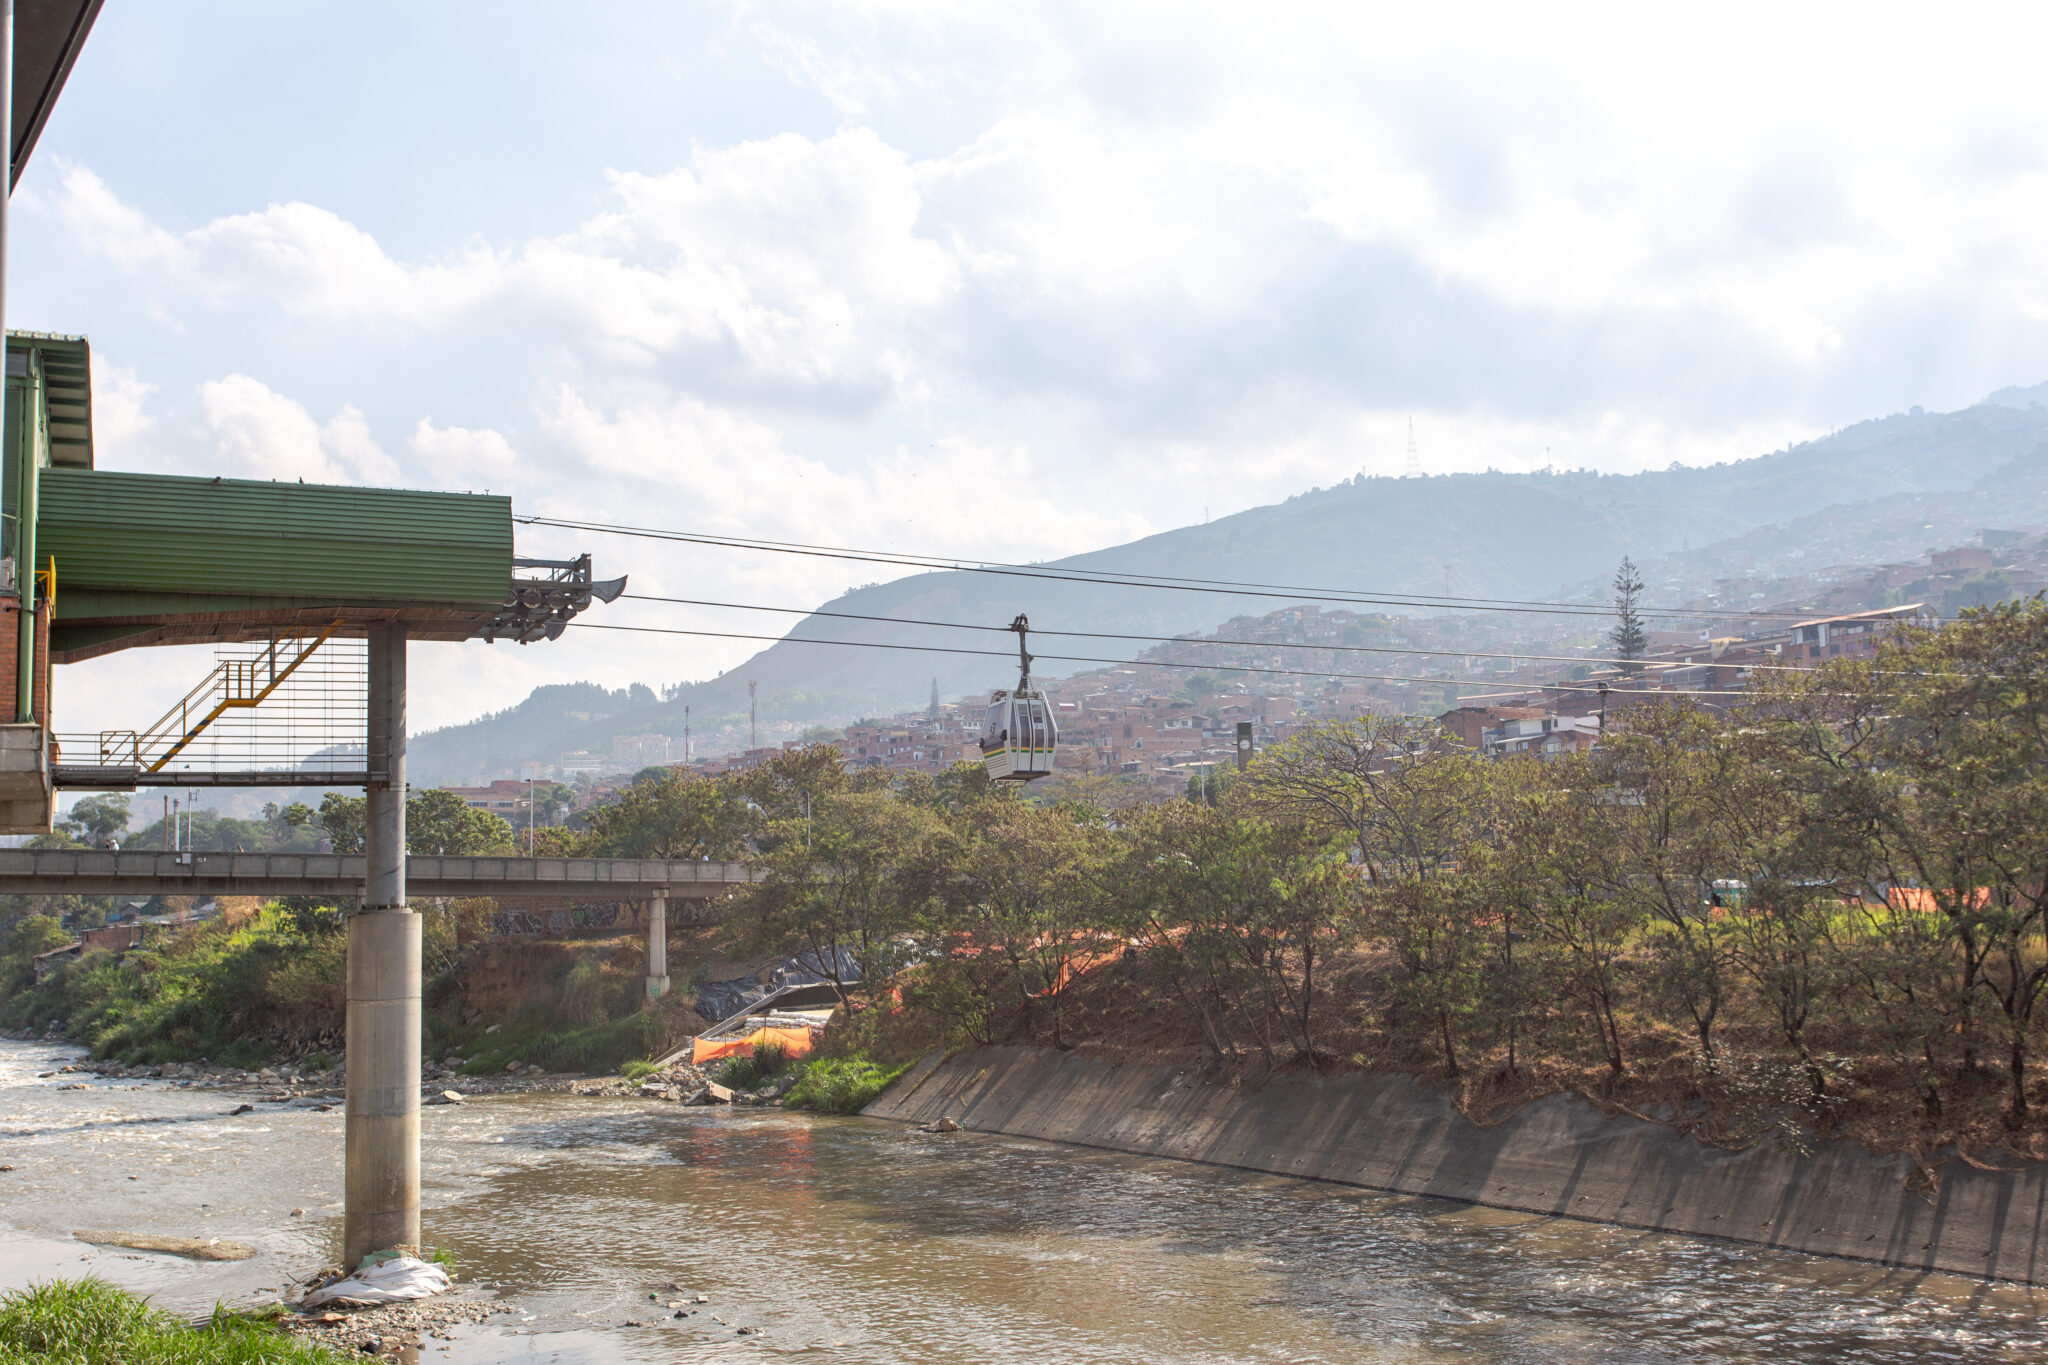 Medellín Shines in Global Public Transportation Rankings